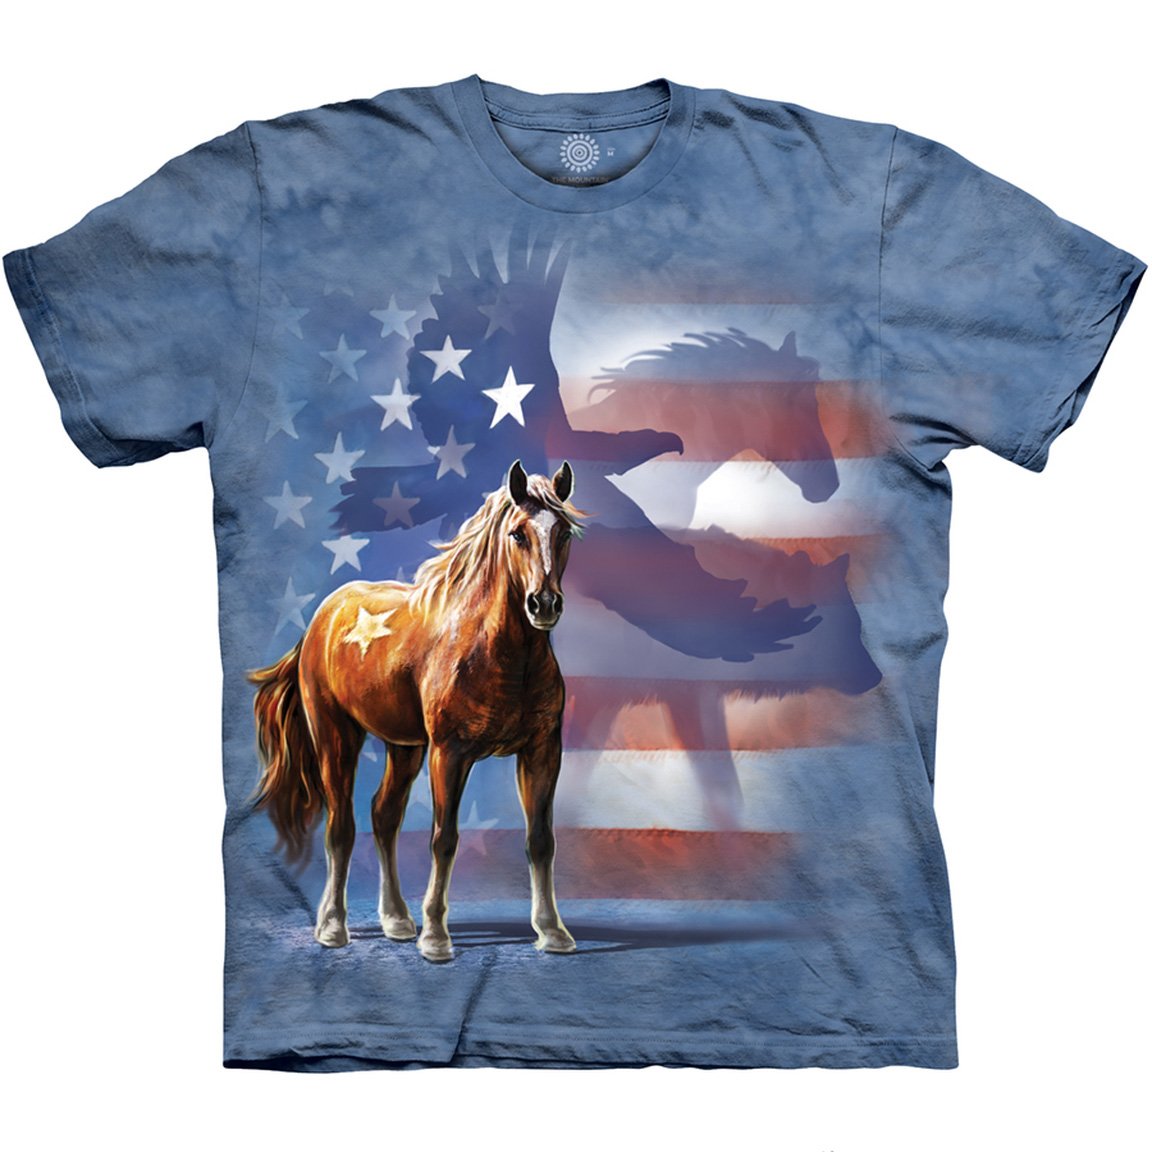 The Mountain Wild Star Flag - Horse & Eagle T-Shirt